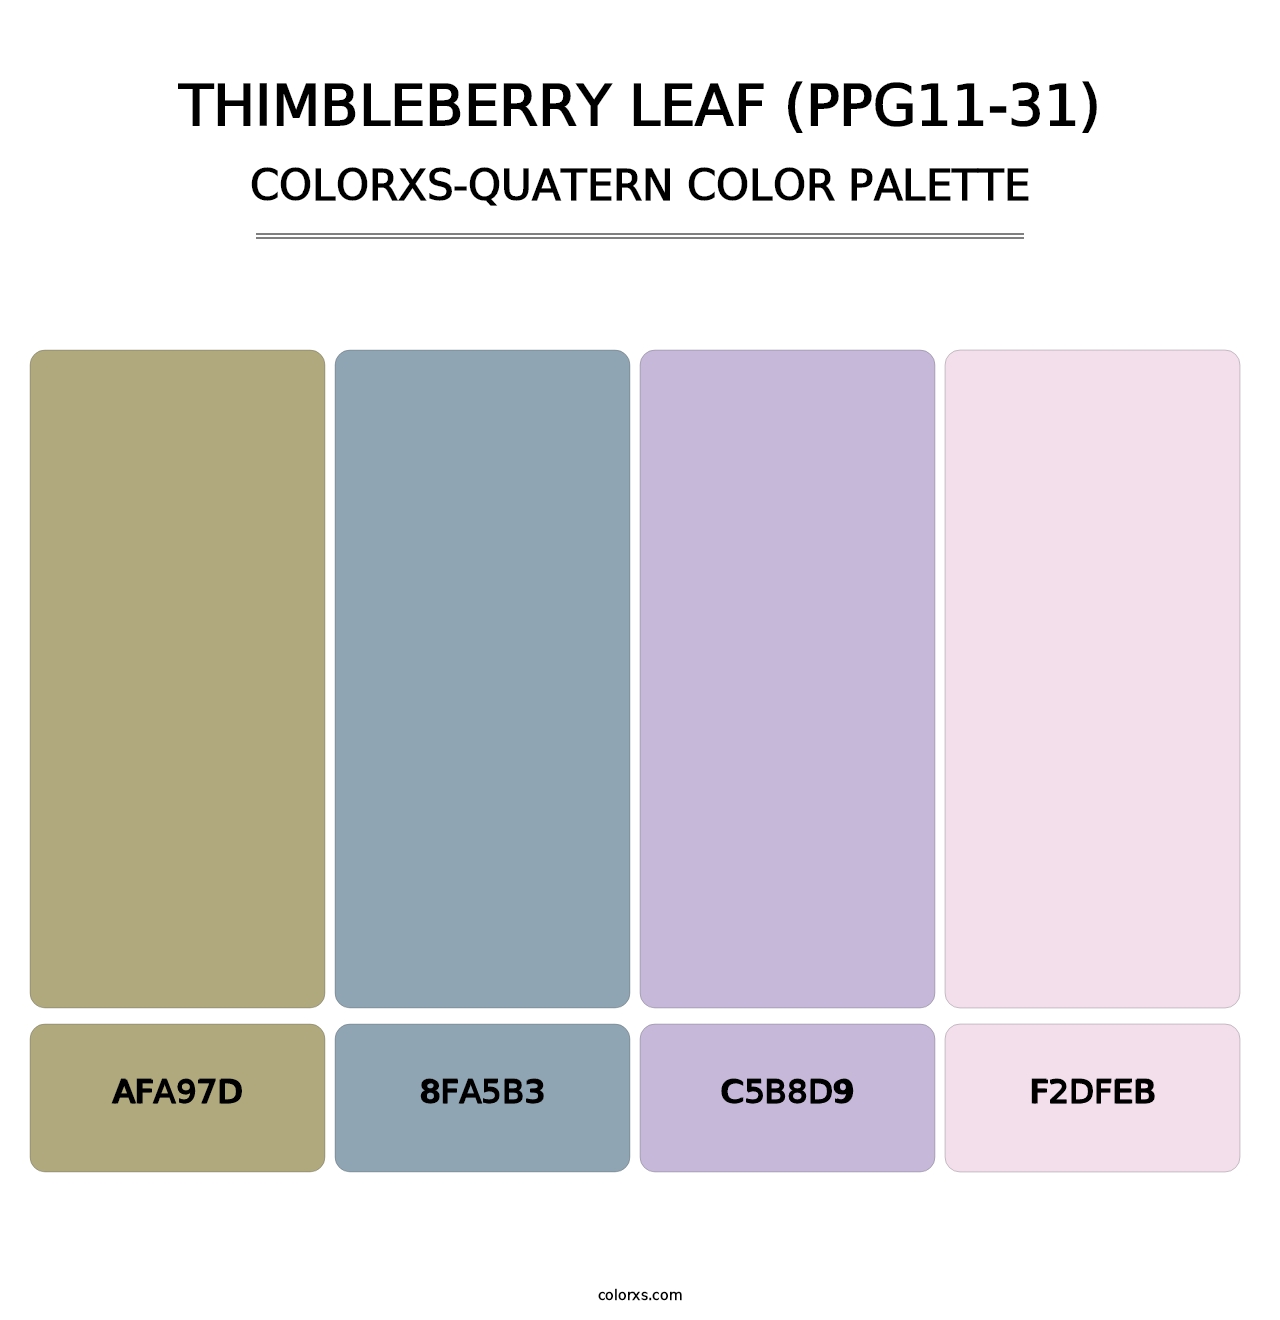 Thimbleberry Leaf (PPG11-31) - Colorxs Quatern Palette